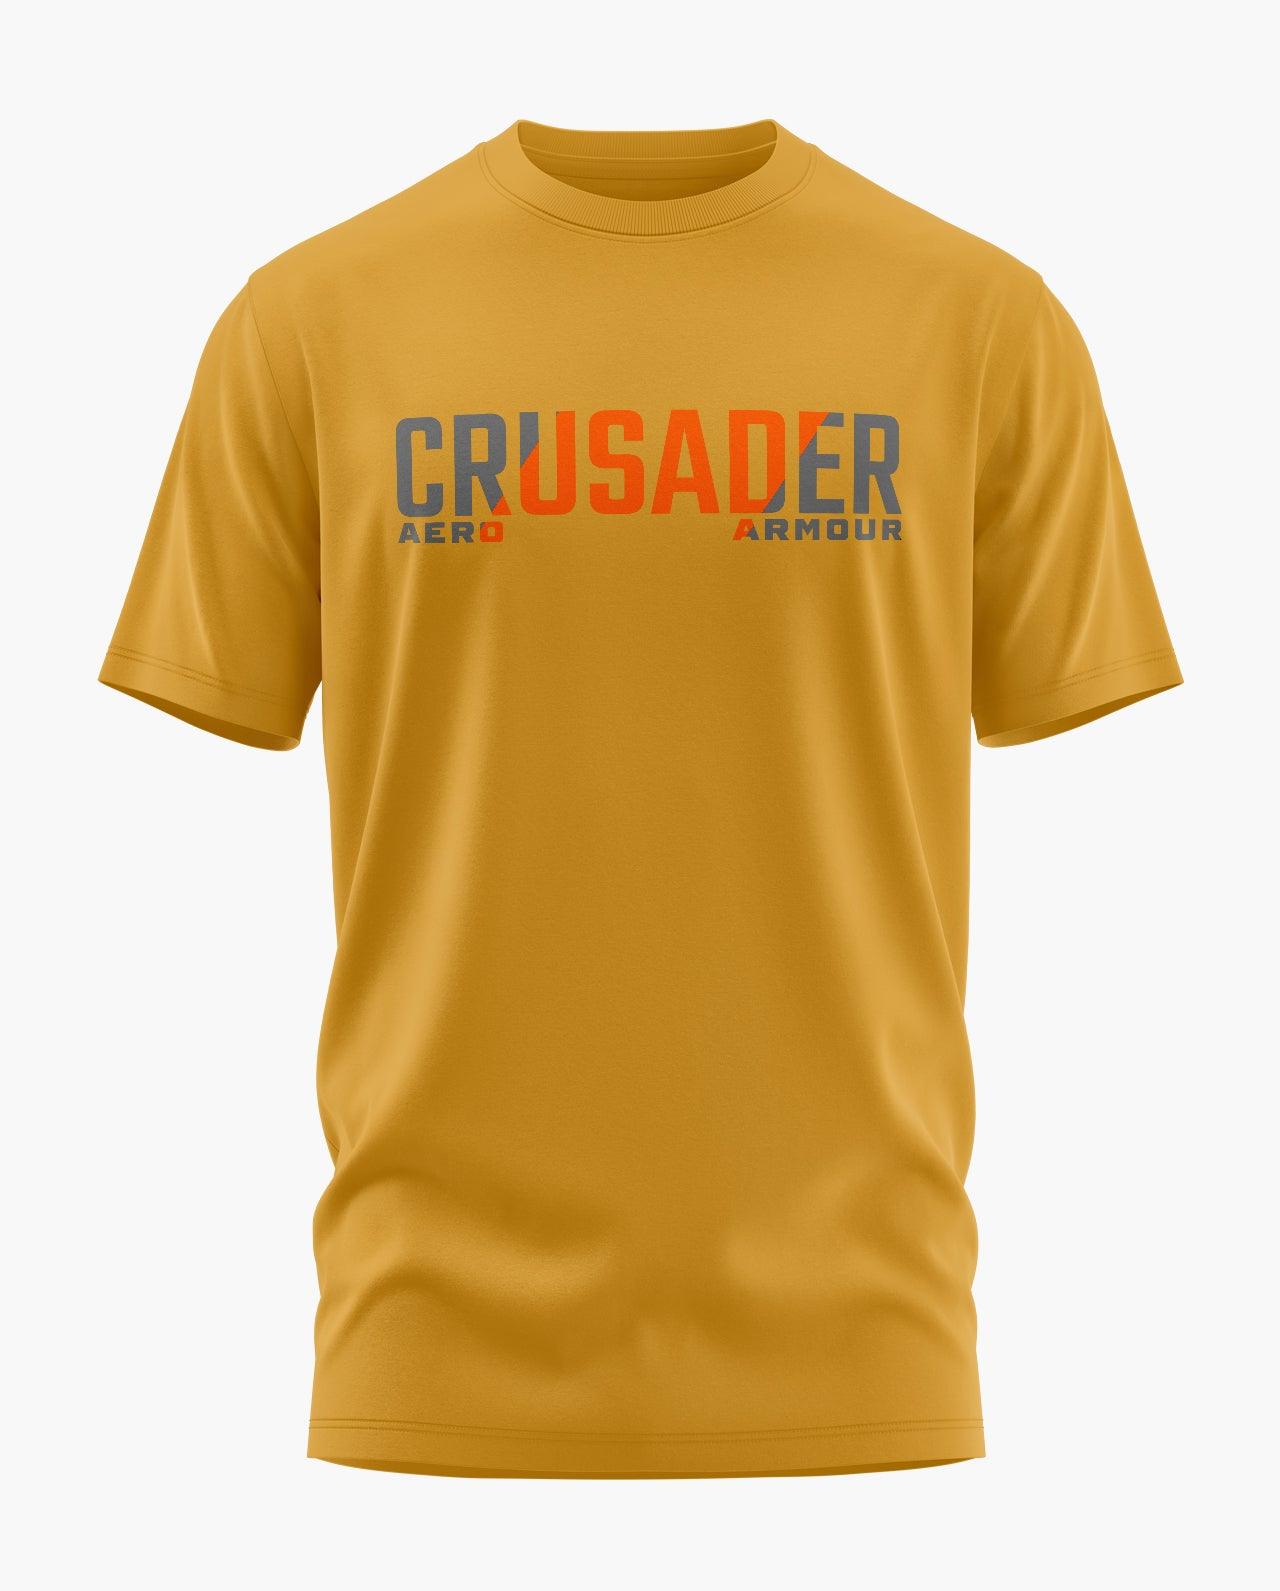 Crusader T-Shirt - Aero Armour